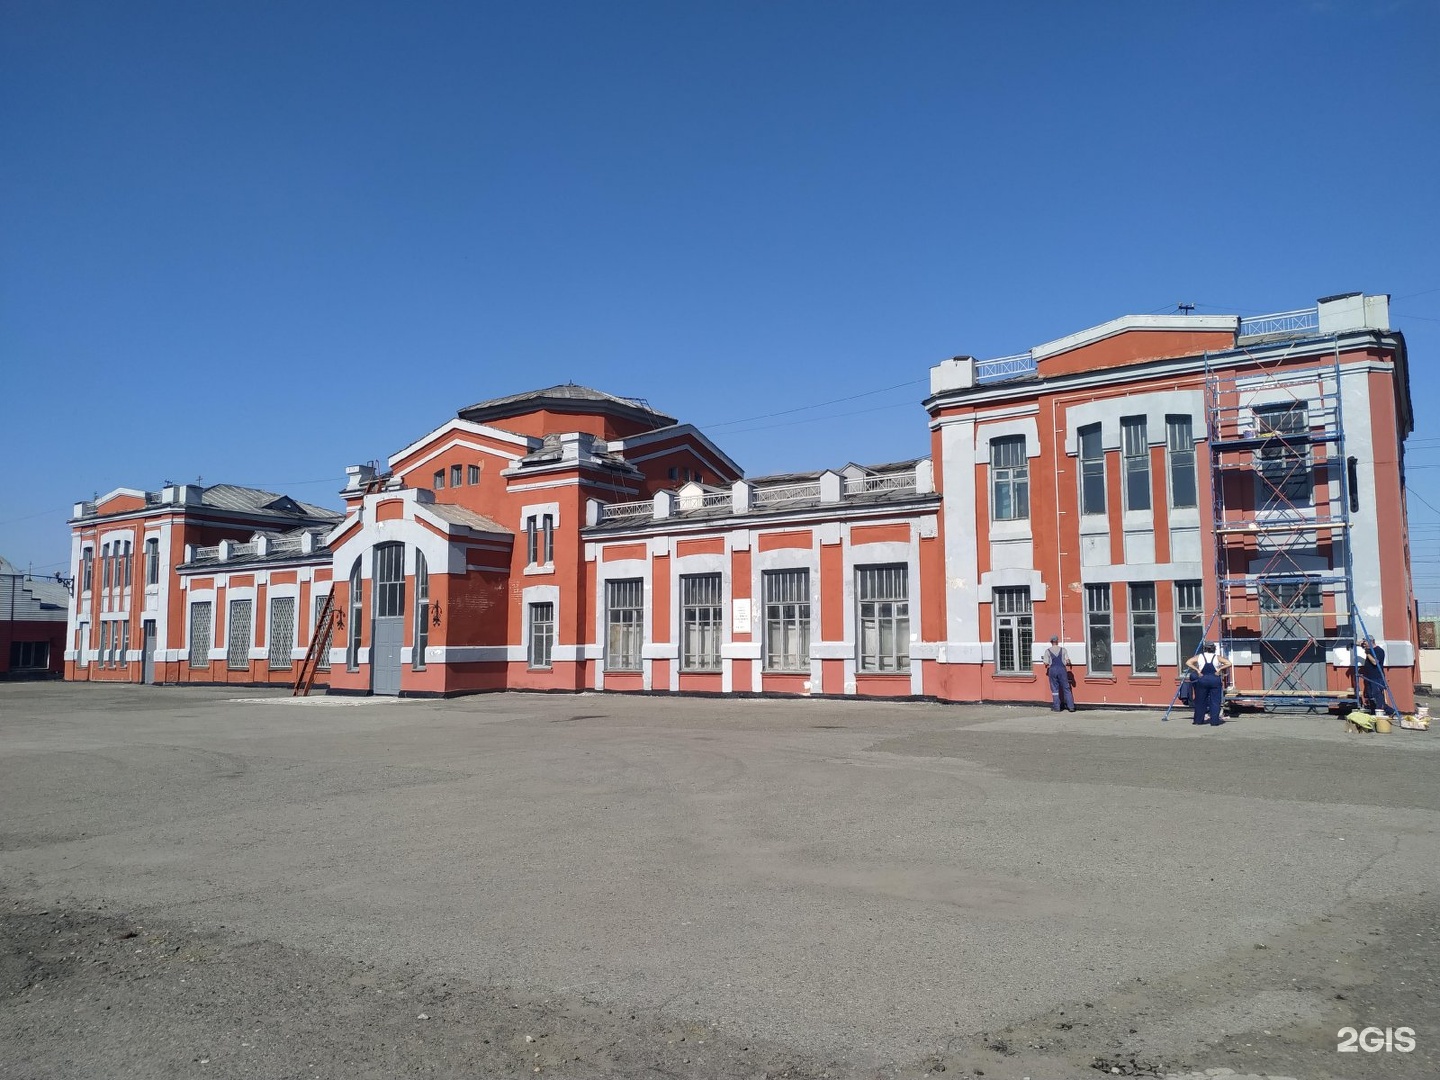 Барнаул железная дорога. Здание вокзала Барнаул. Старое здание ЖД вокзала Барнаул. ЖД вокзал Барнаул 1915. Станция Барнаул ЖД вокзал.